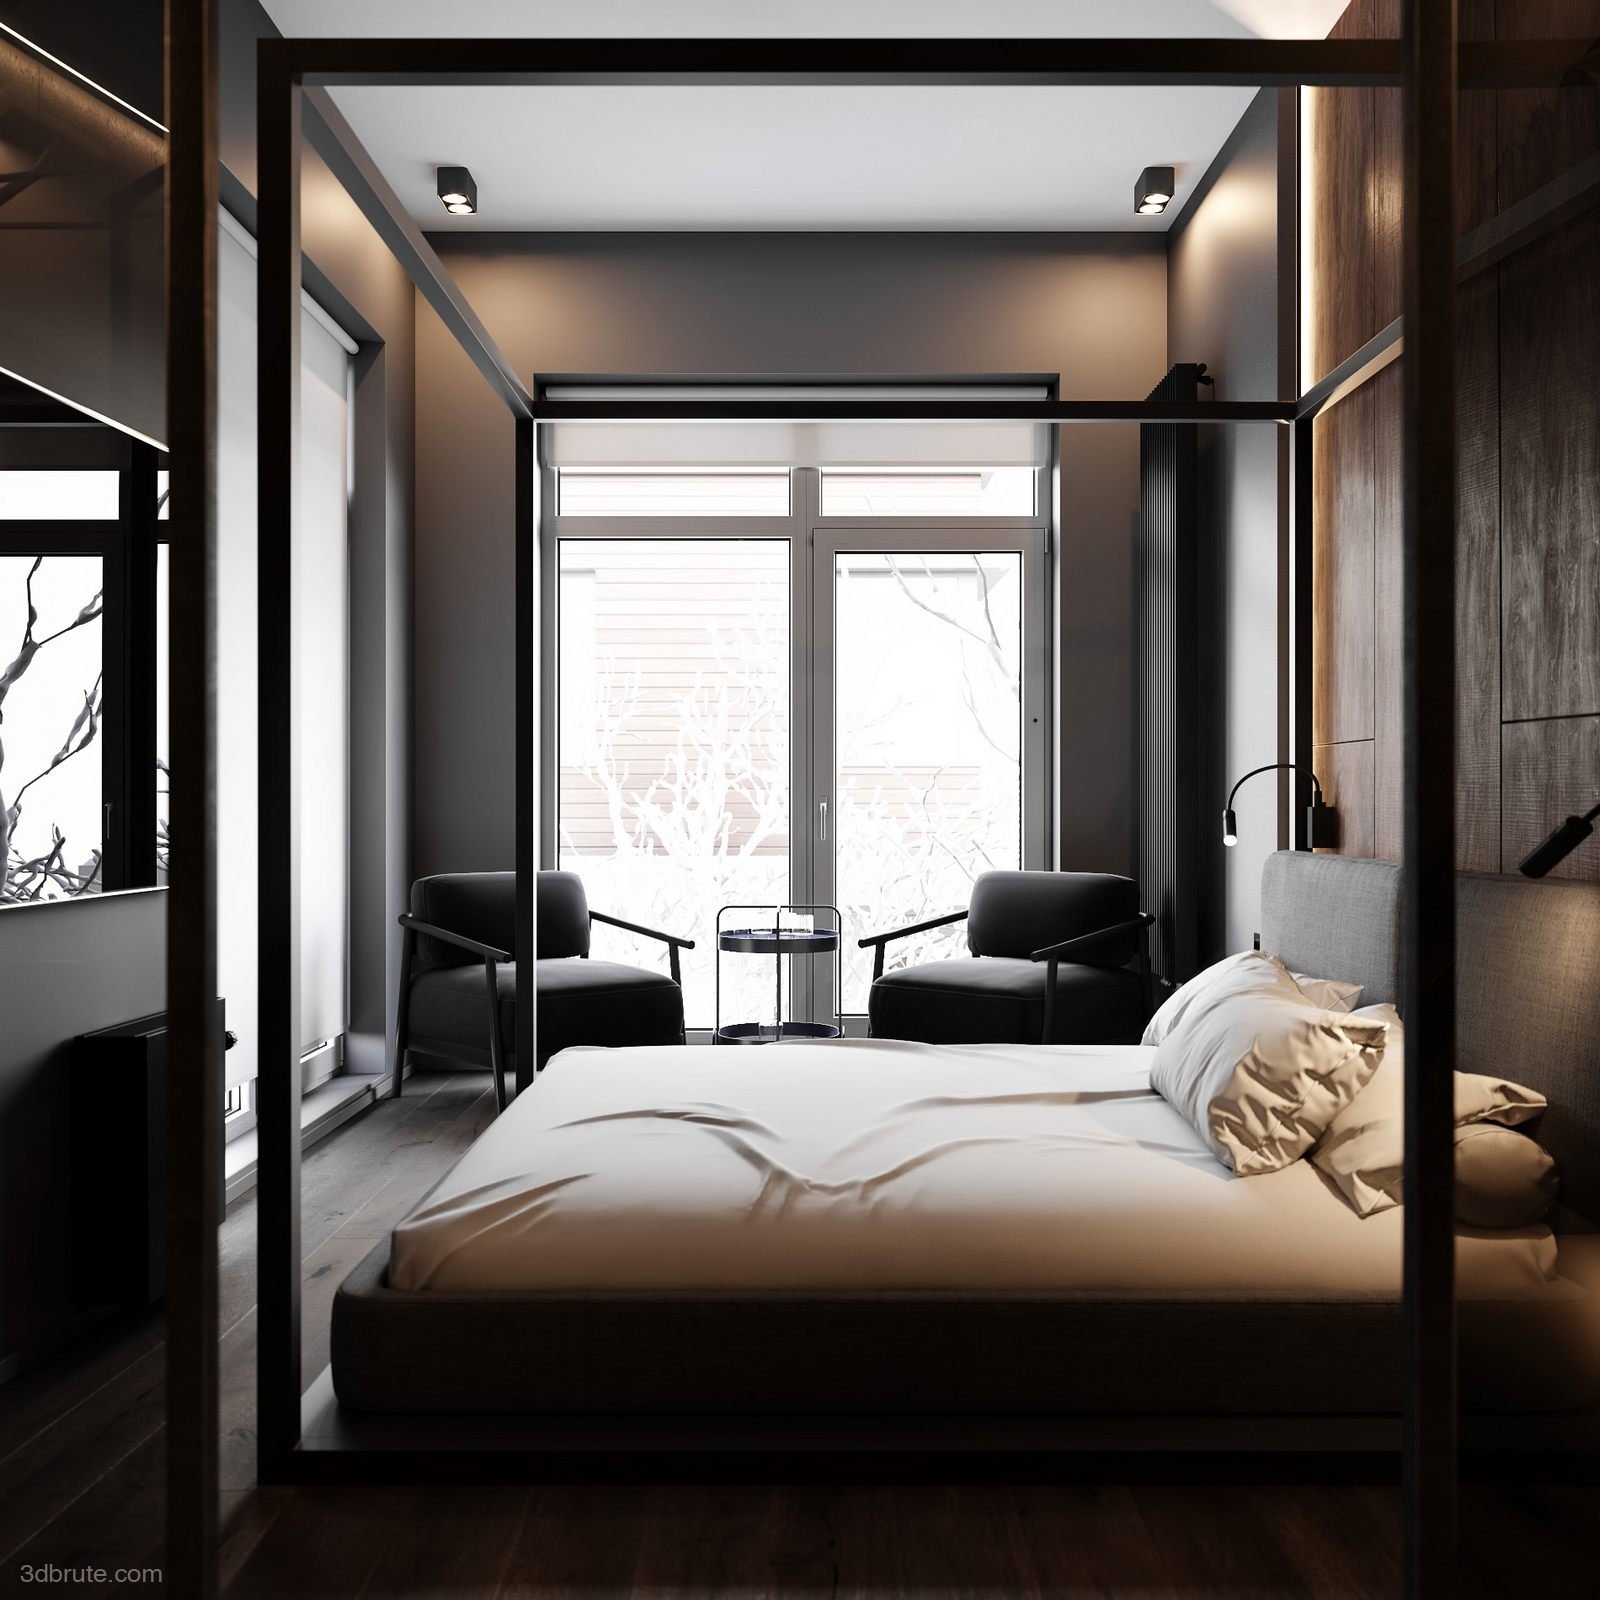 High-end ash meets modern homes-full of textured life idea 3dbrute